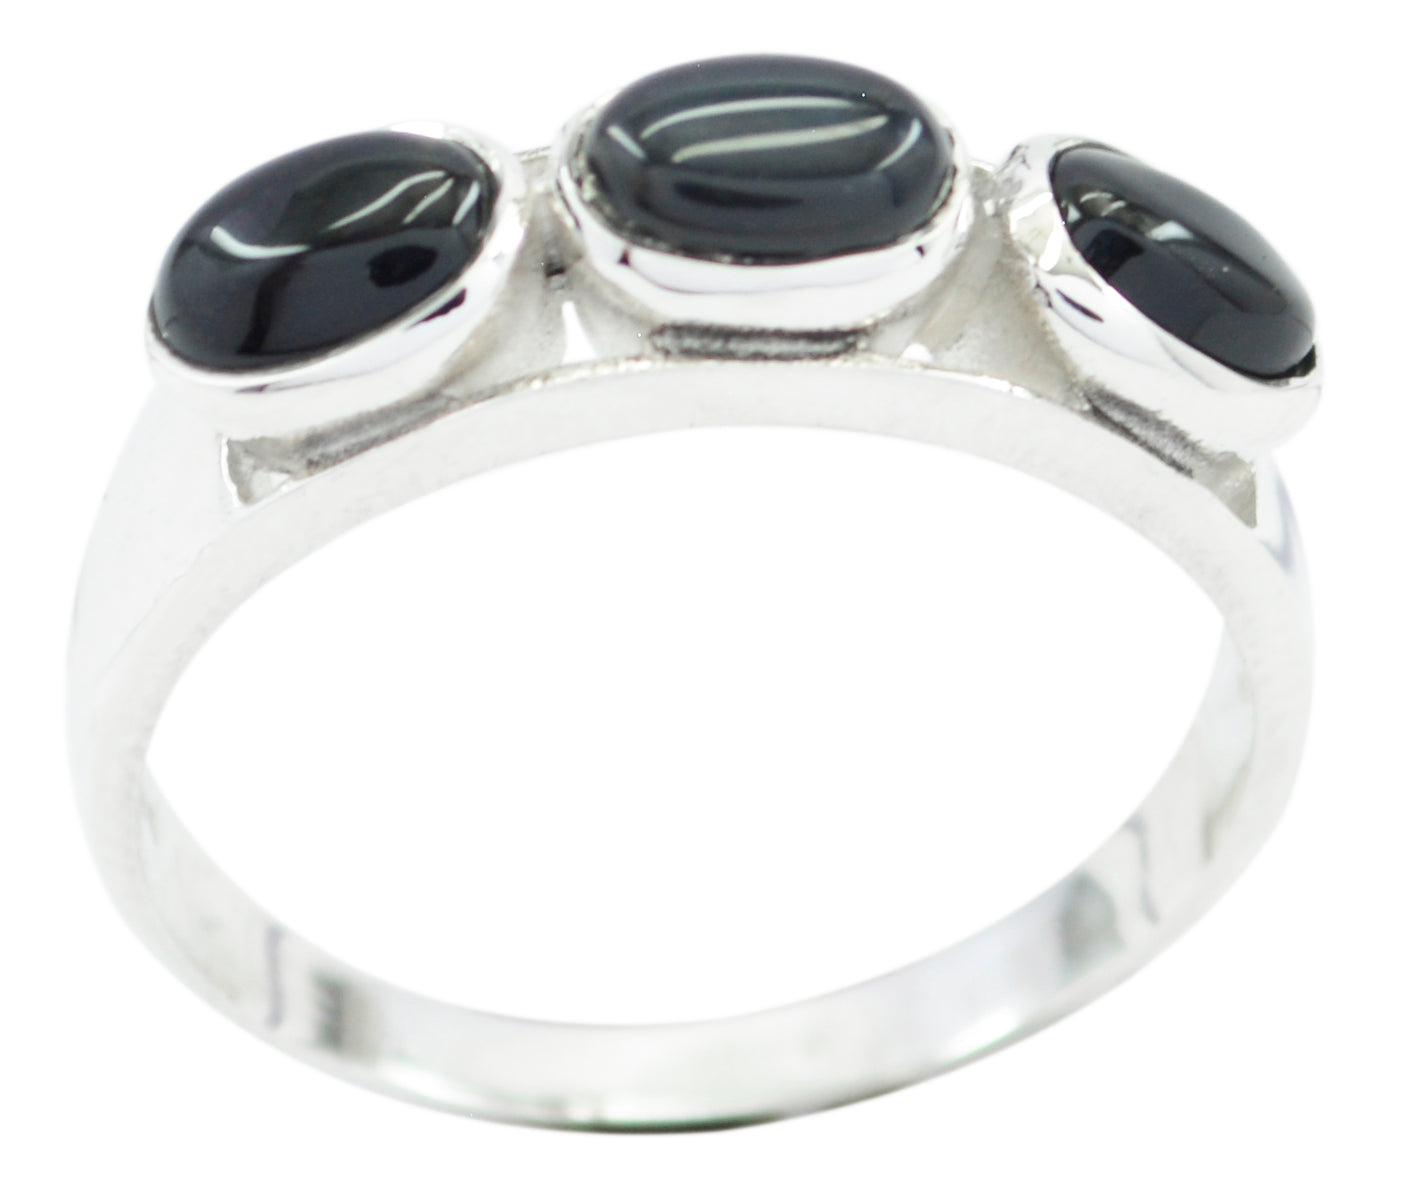 Riyo Flawless Gems Black Onyx 925 Sterling Silver Ring Jewelry Art